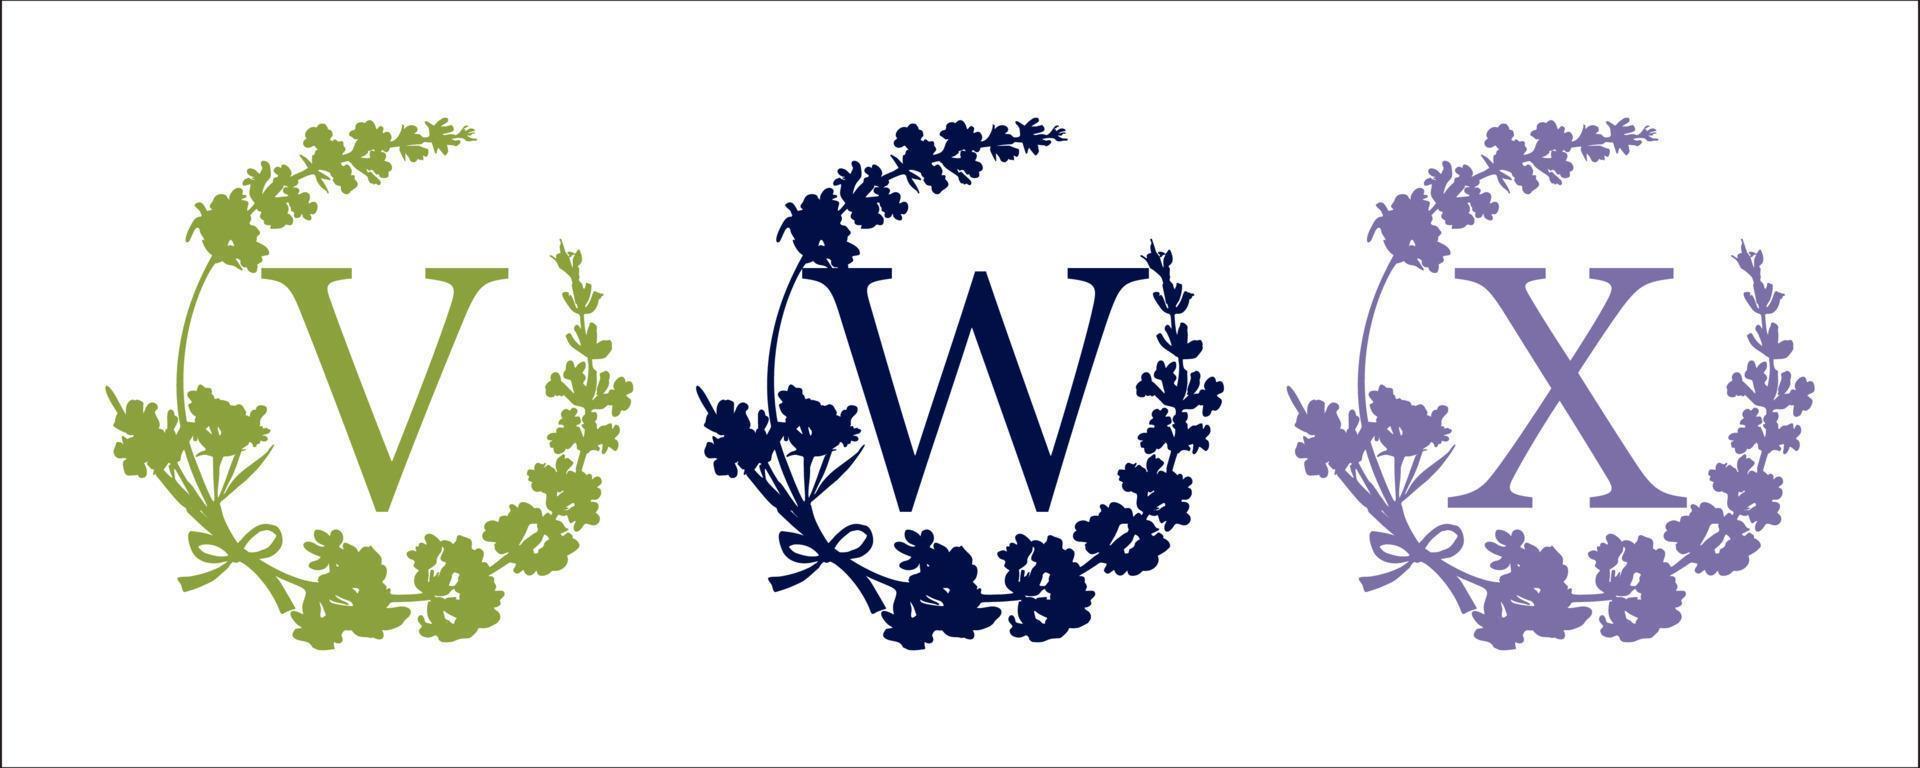 V W X letter. Set modern hand-drawn silhouette sketch illustrations. Lavender flower wreath with alphabet monogram. good idea for wedding decor. Vintage vector typographic emblem, logo, label design.